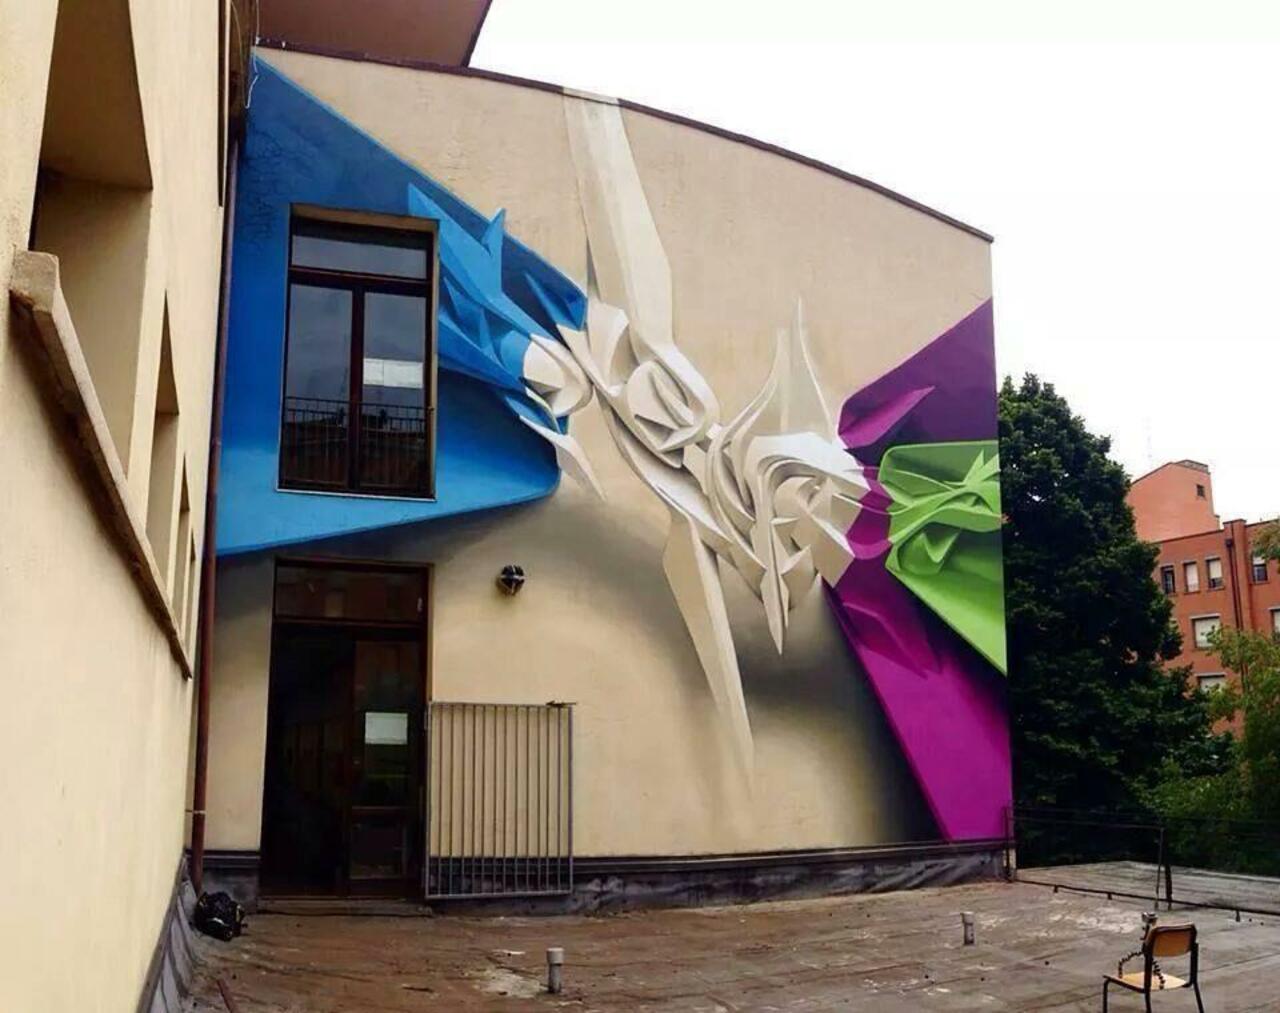 Artist @peeta3D amazing Street Art piece in Italy #art #mural #graffiti #streetart https://t.co/dXo311M5FY